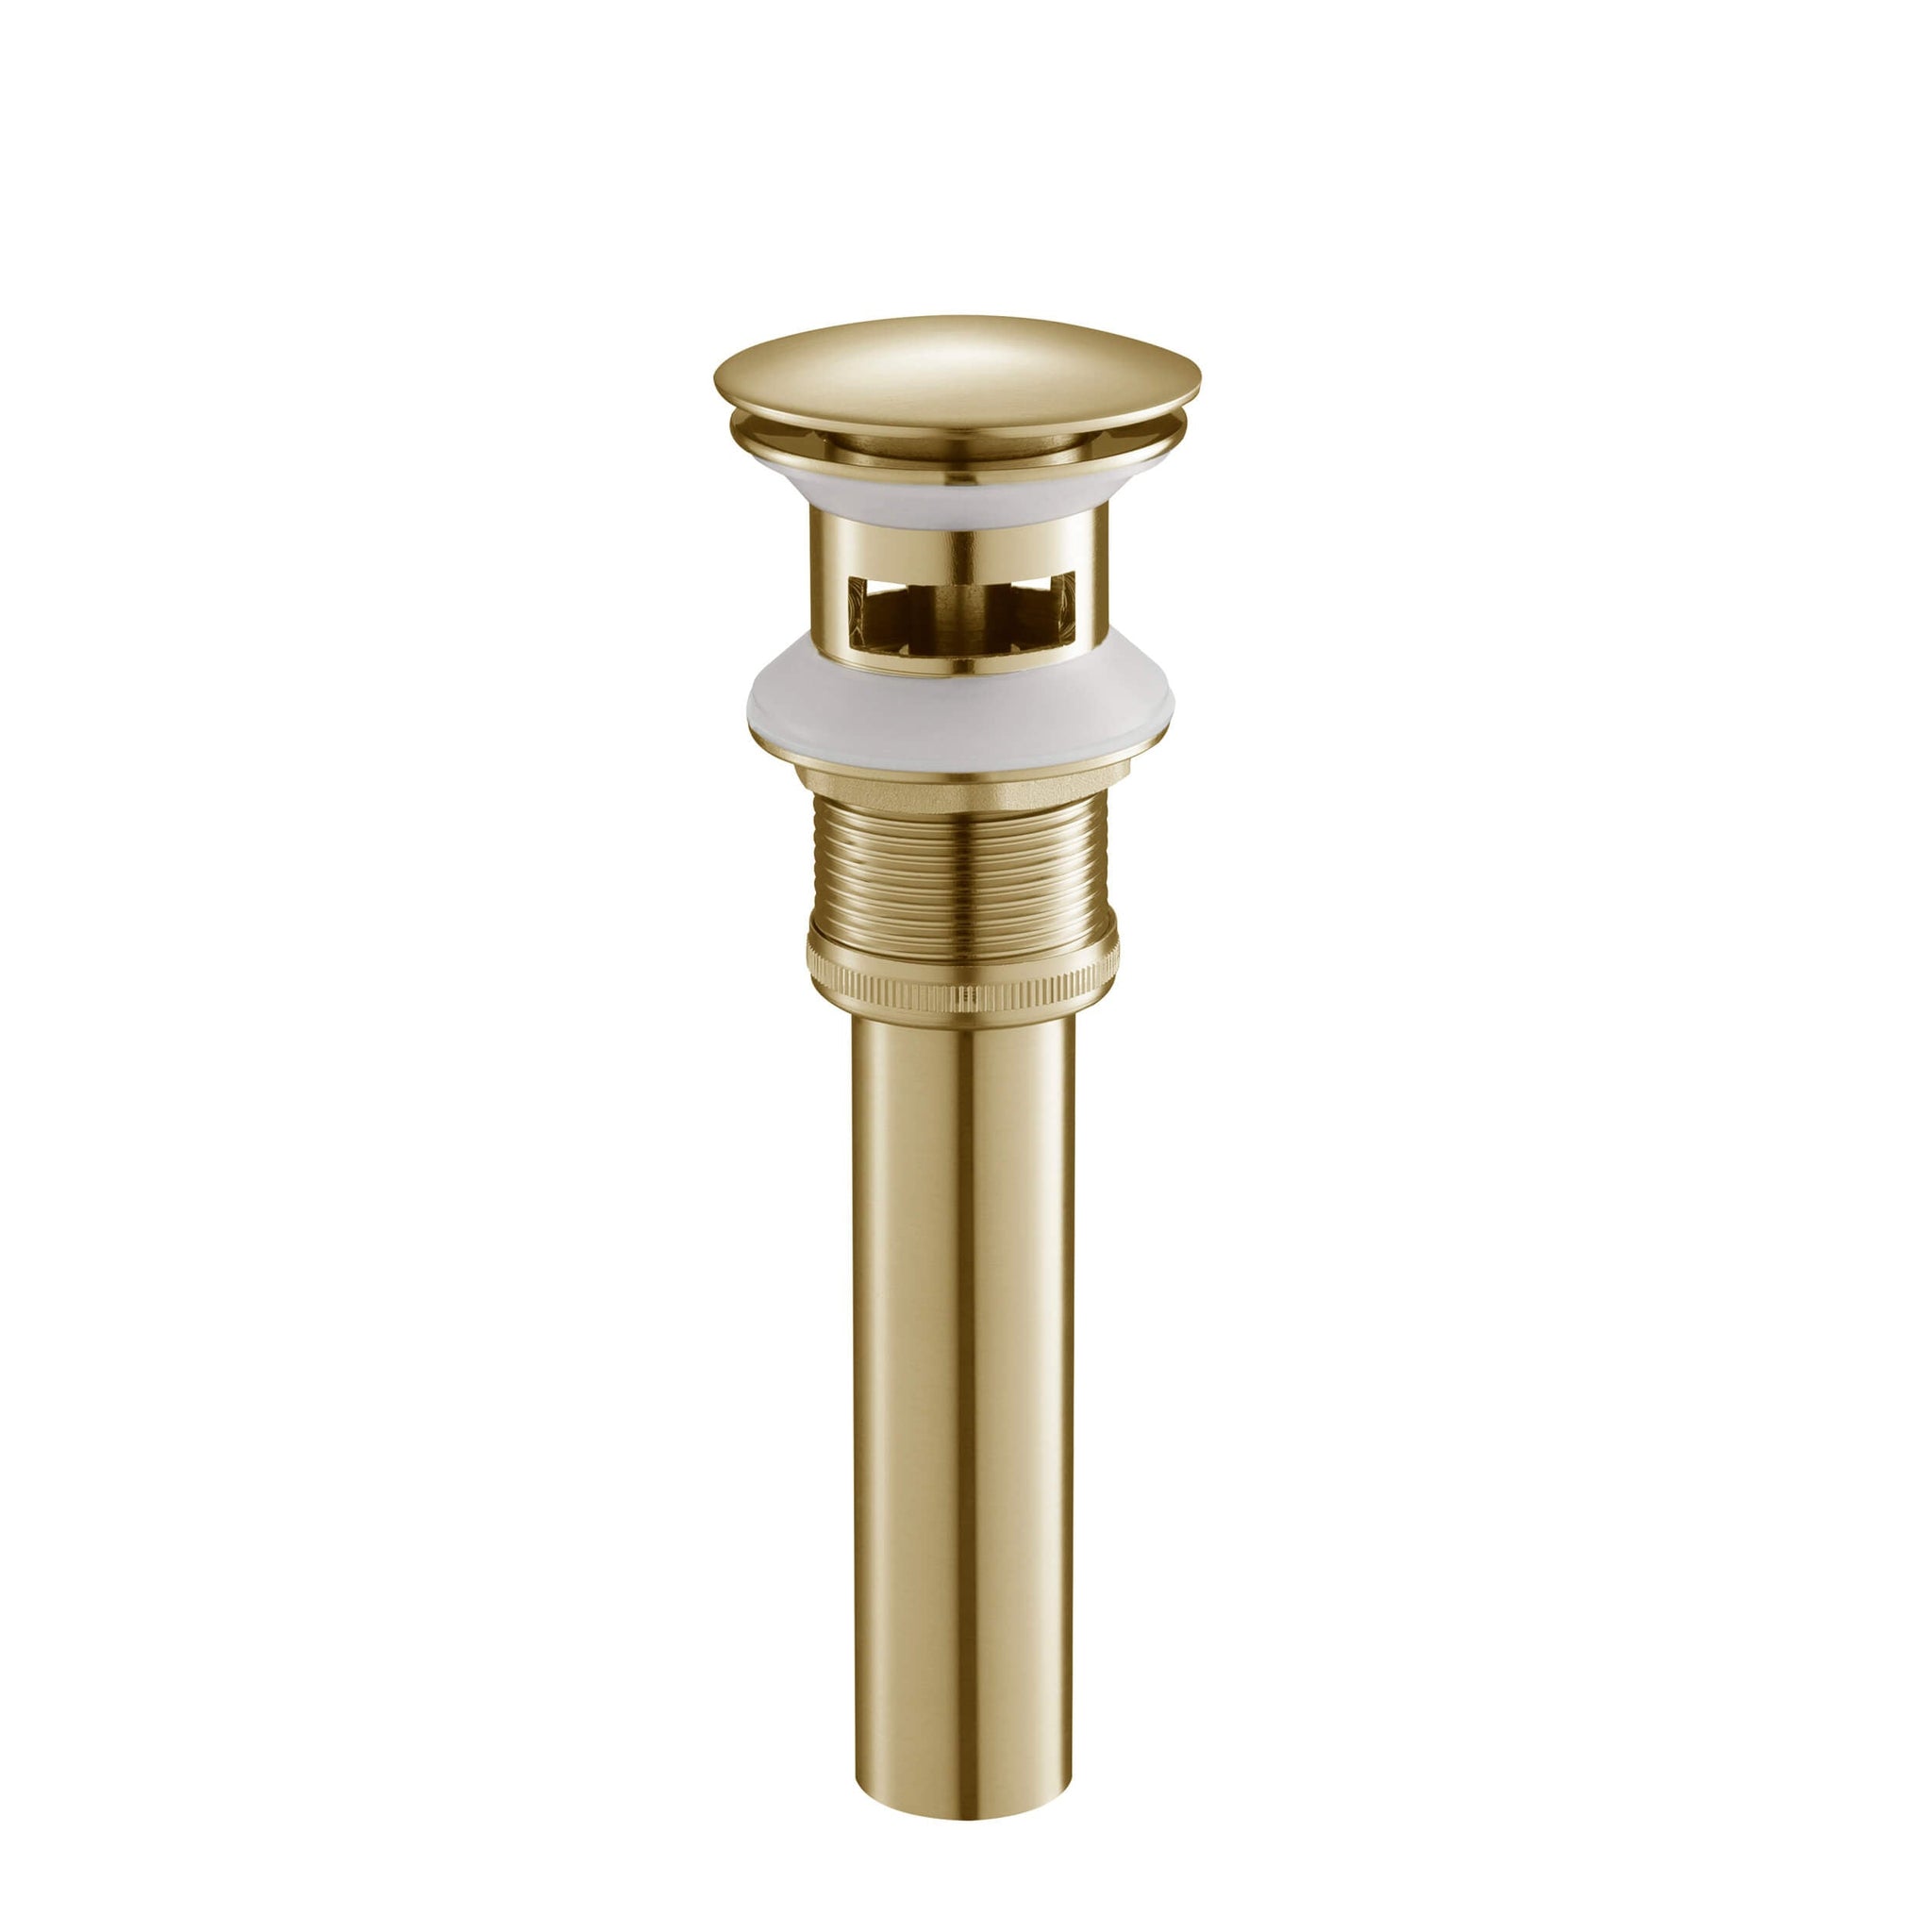 KIBI, KIBI Brass Bathroom Sink Pop-Up Drain Stopper Full Cover With Overflow in Brushed Gold Finish